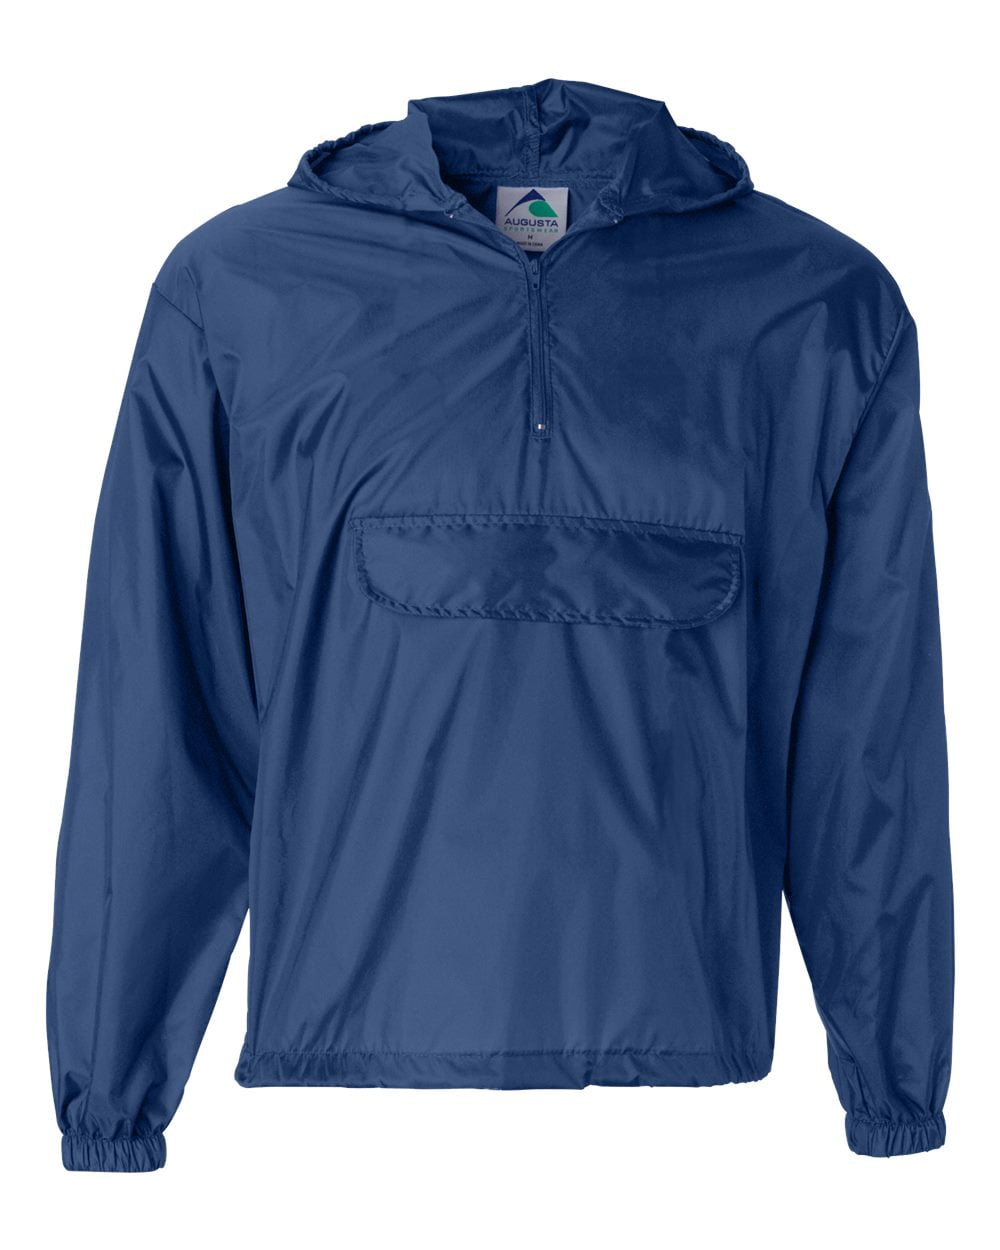 Club Sports Packable Half-Zip Pullover Jacket Size S-3XL Hooded Rain Coat Jumper 